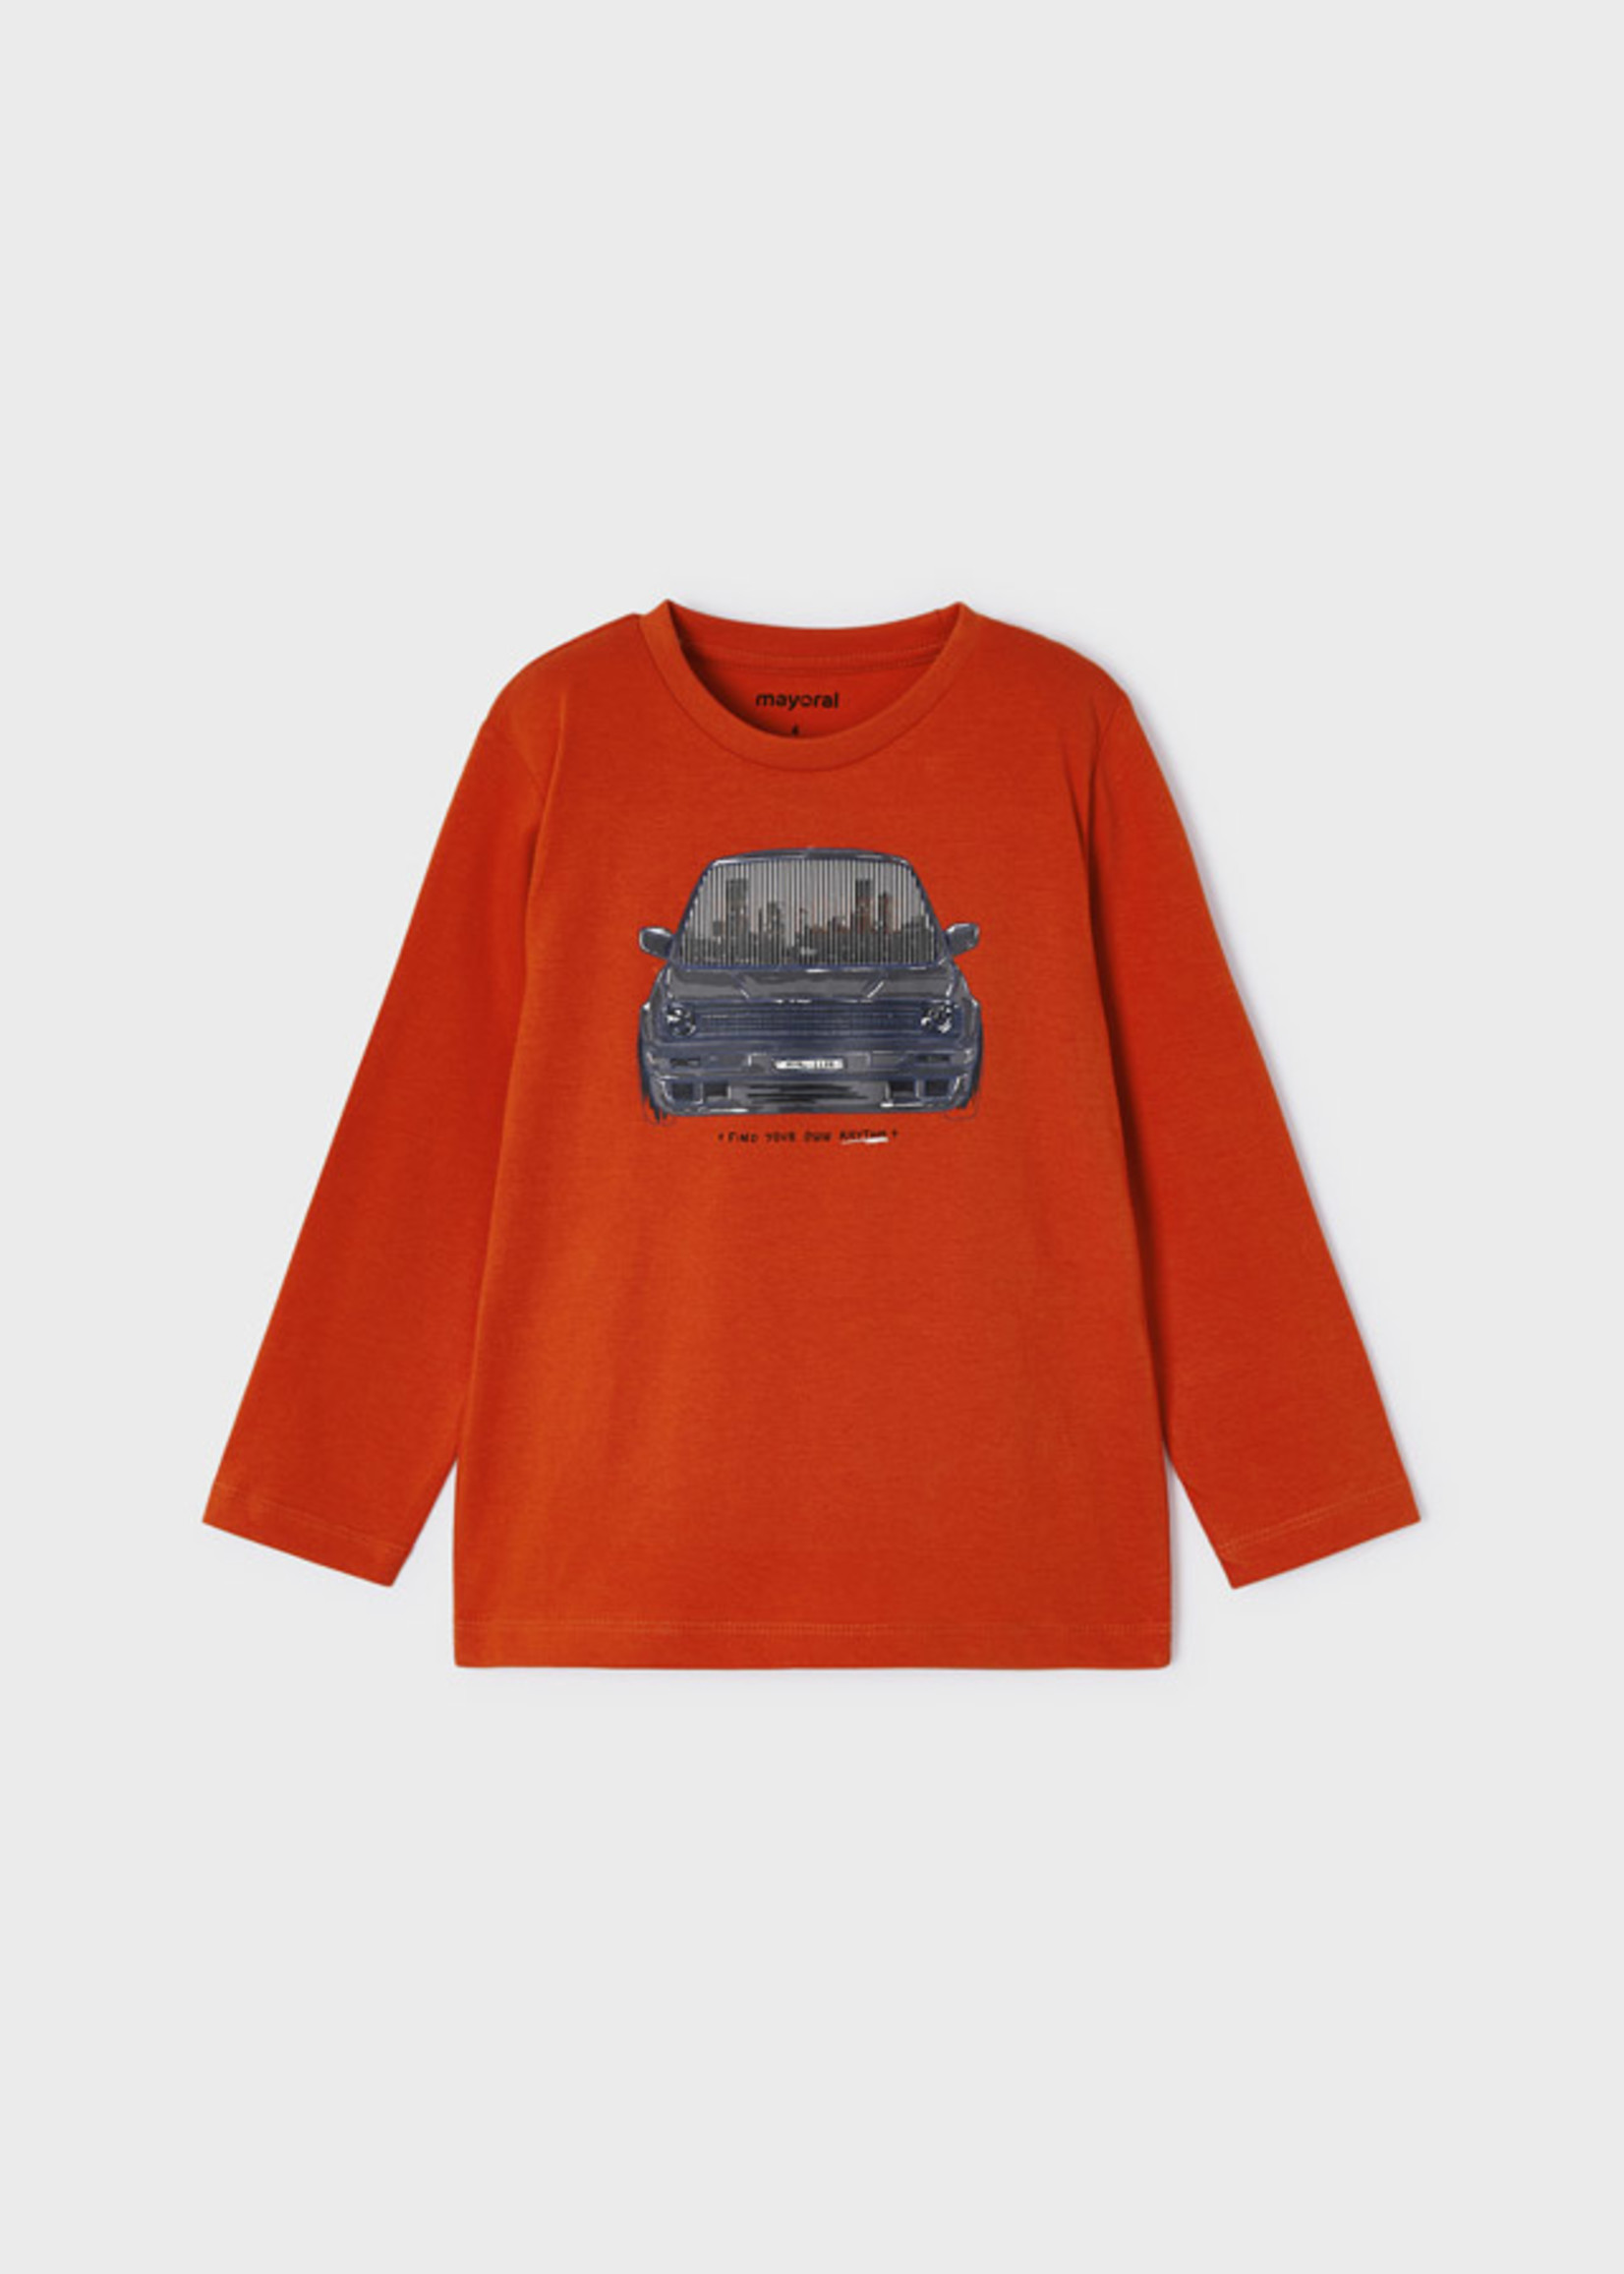 Mayoral L/s shirt                     Rust